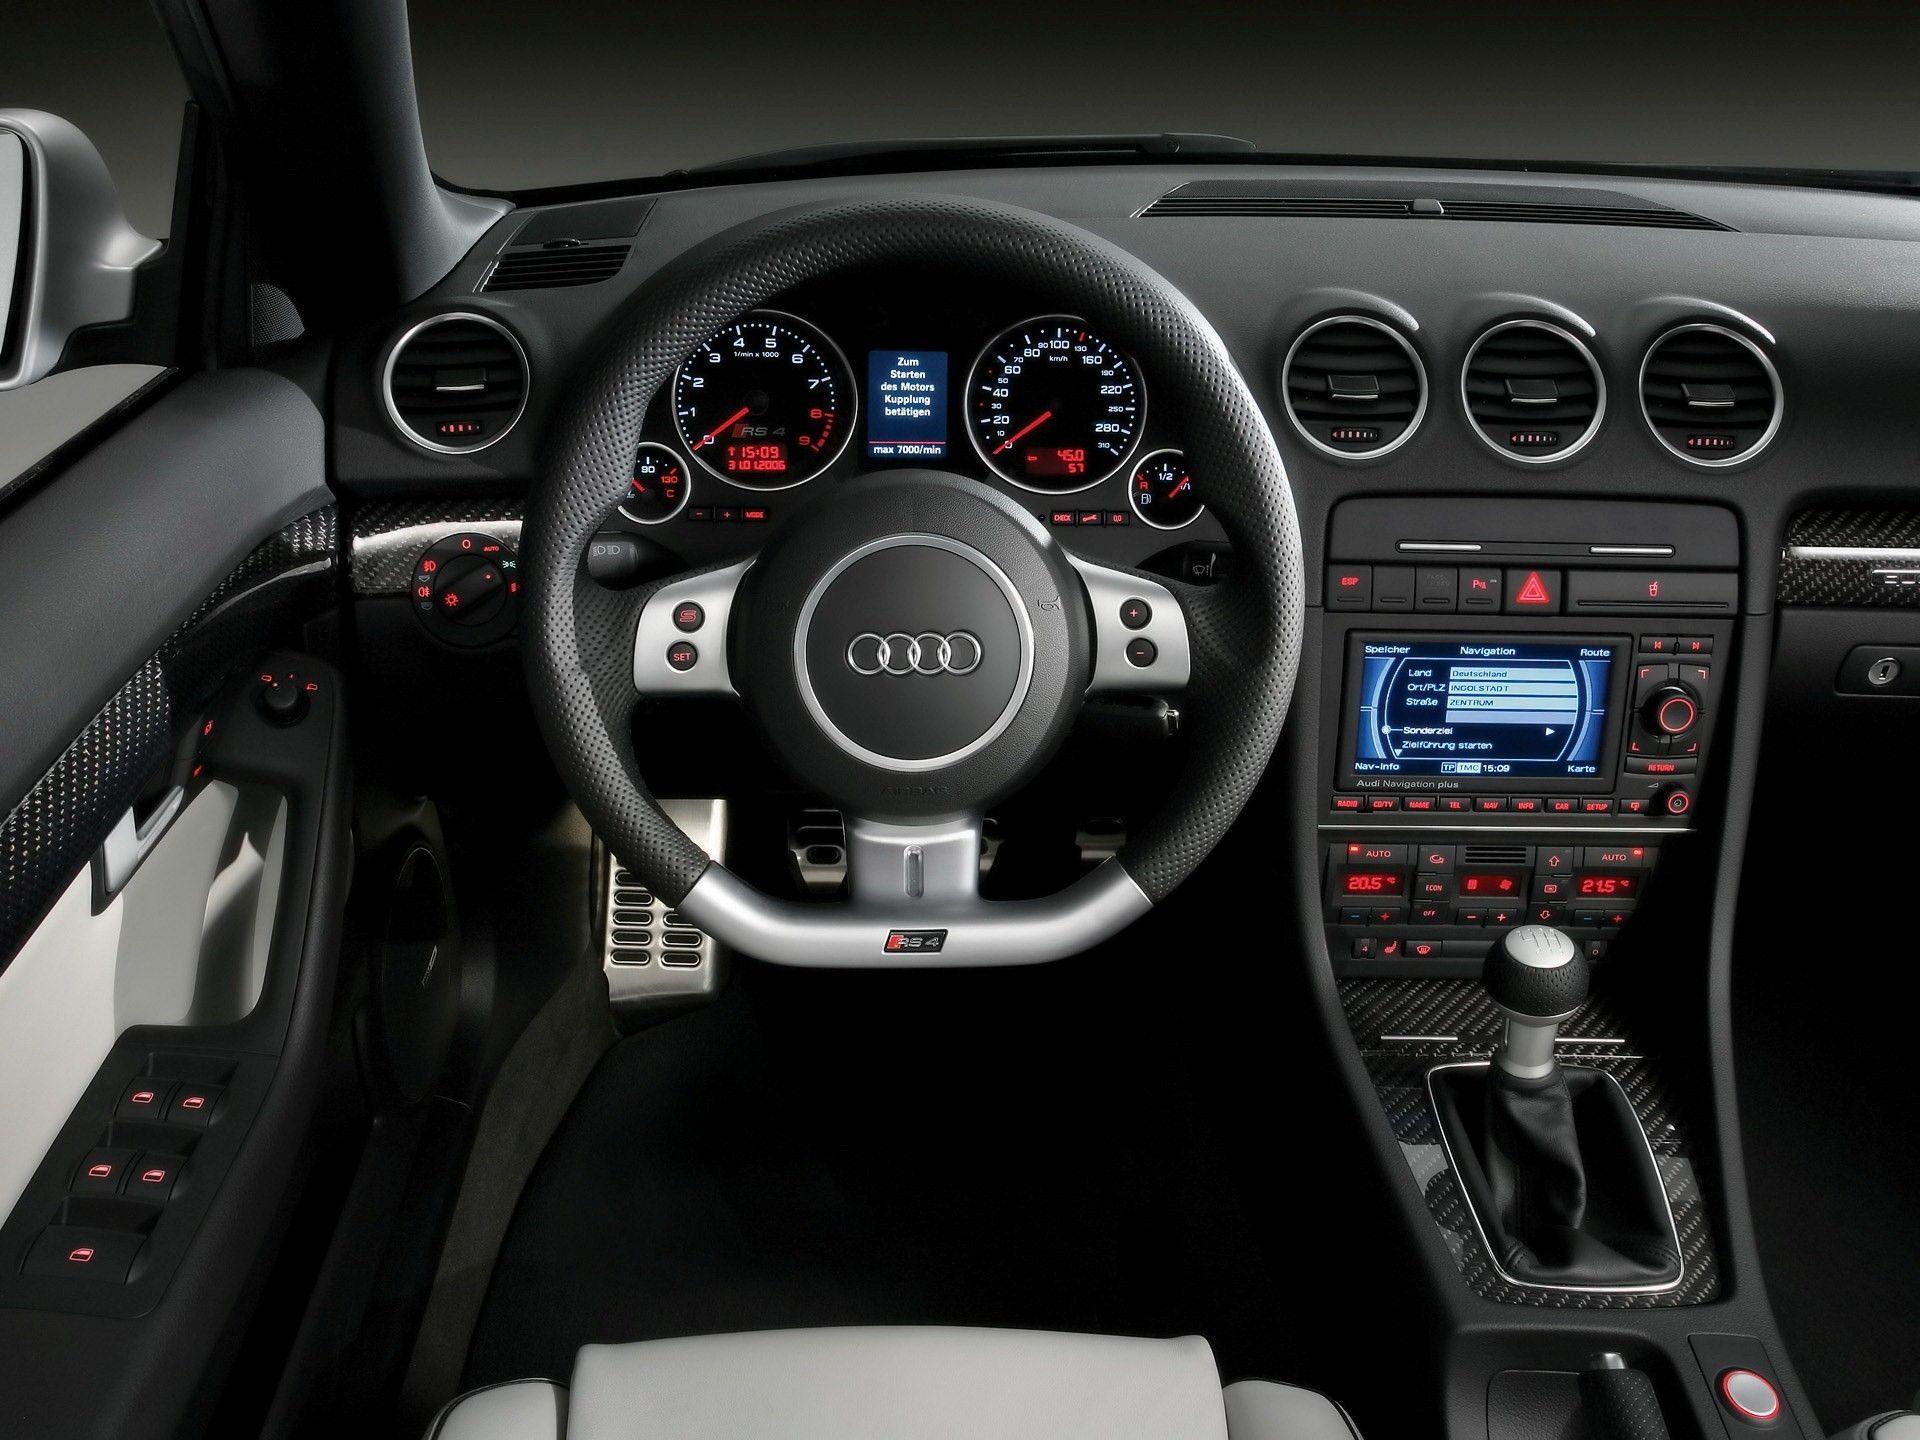 Audi HD Photo. Car Wallpaper Image Picture Download